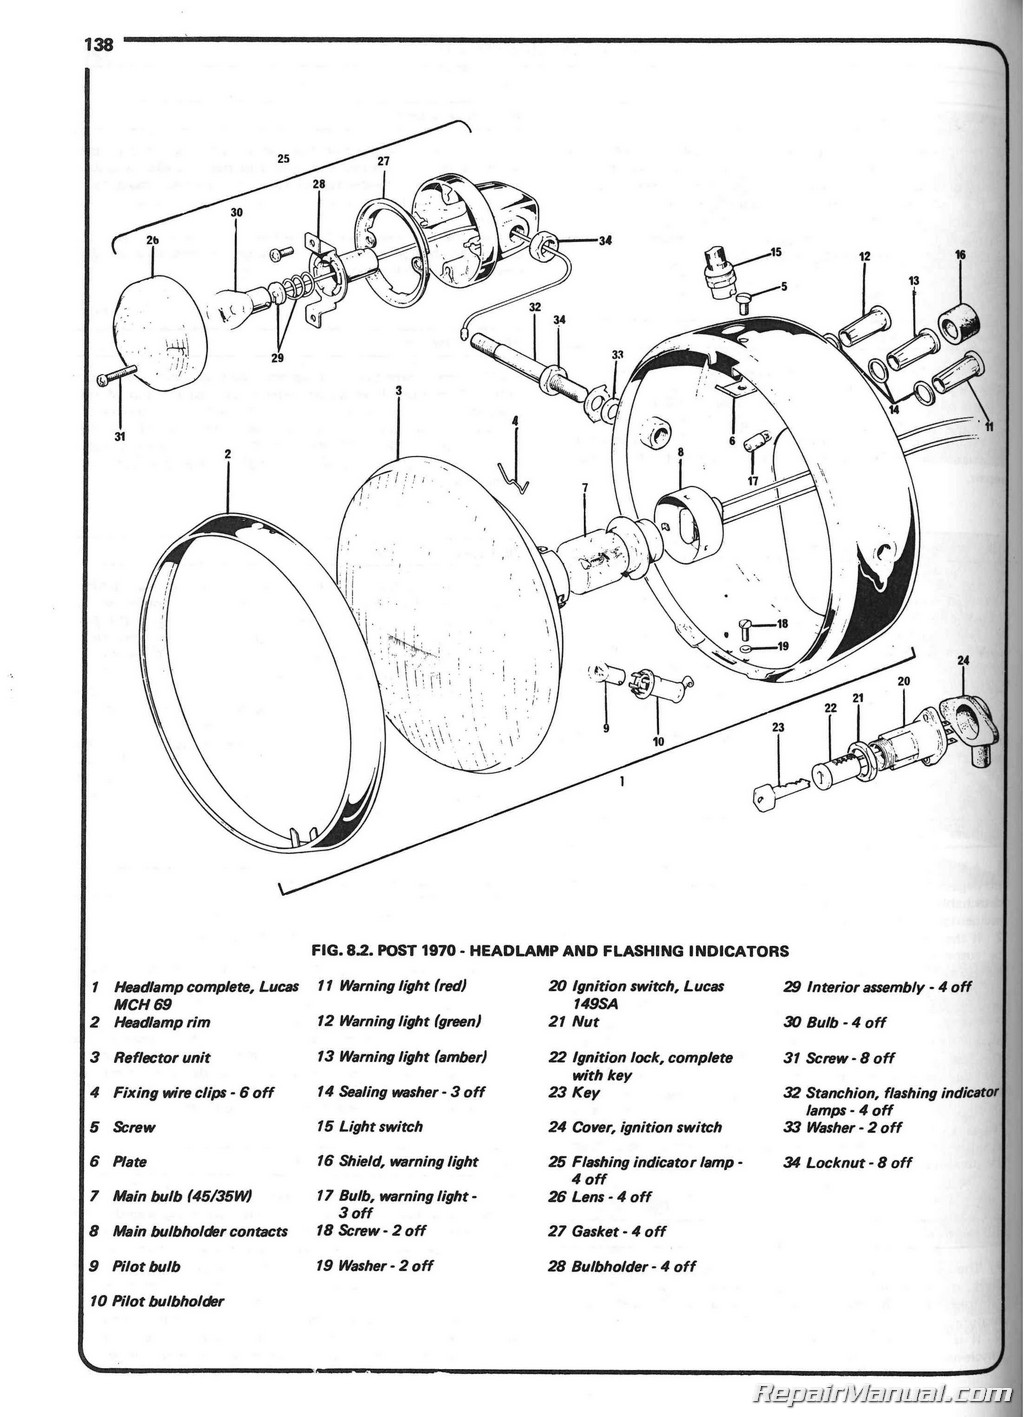 1972 Triumph Tiger 650 Wiring Diagram - Wiring Diagram